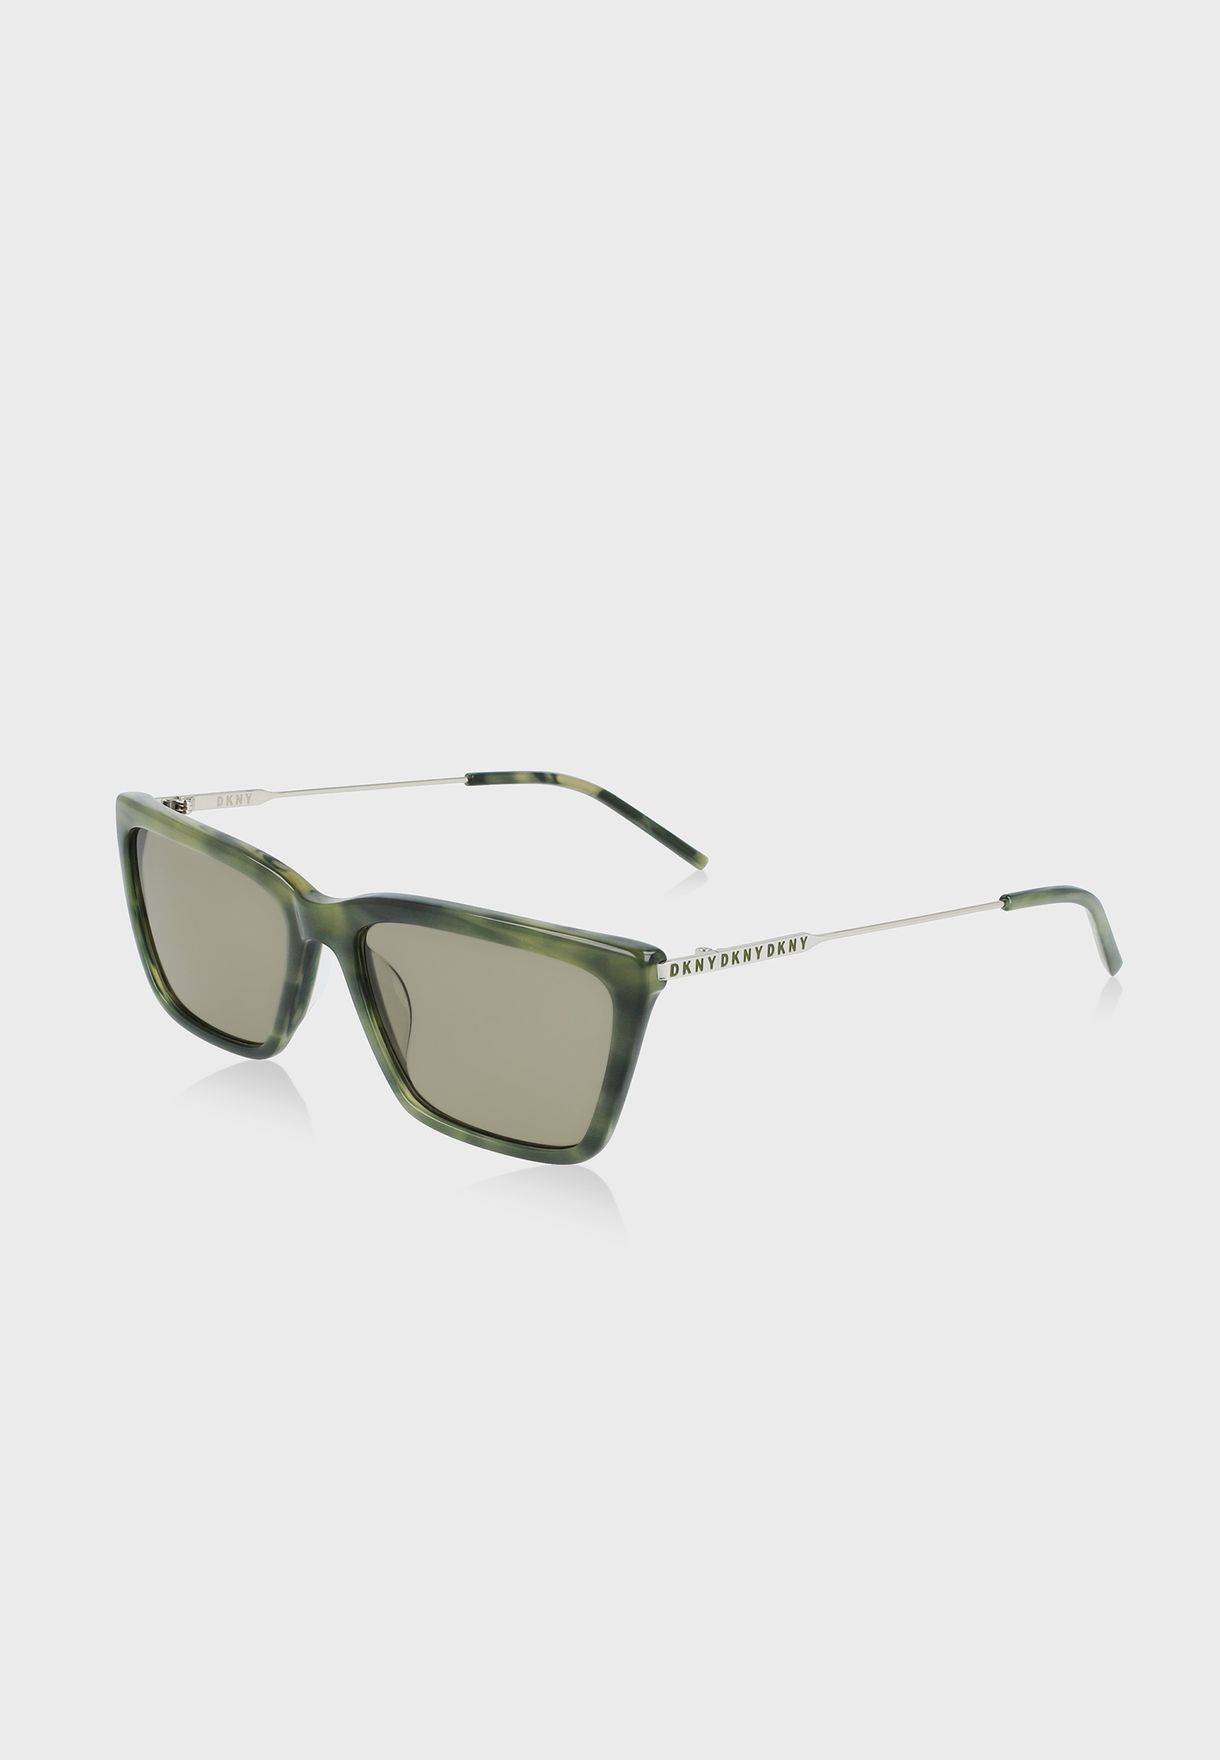 Dk709S Wayferer Sunglasses